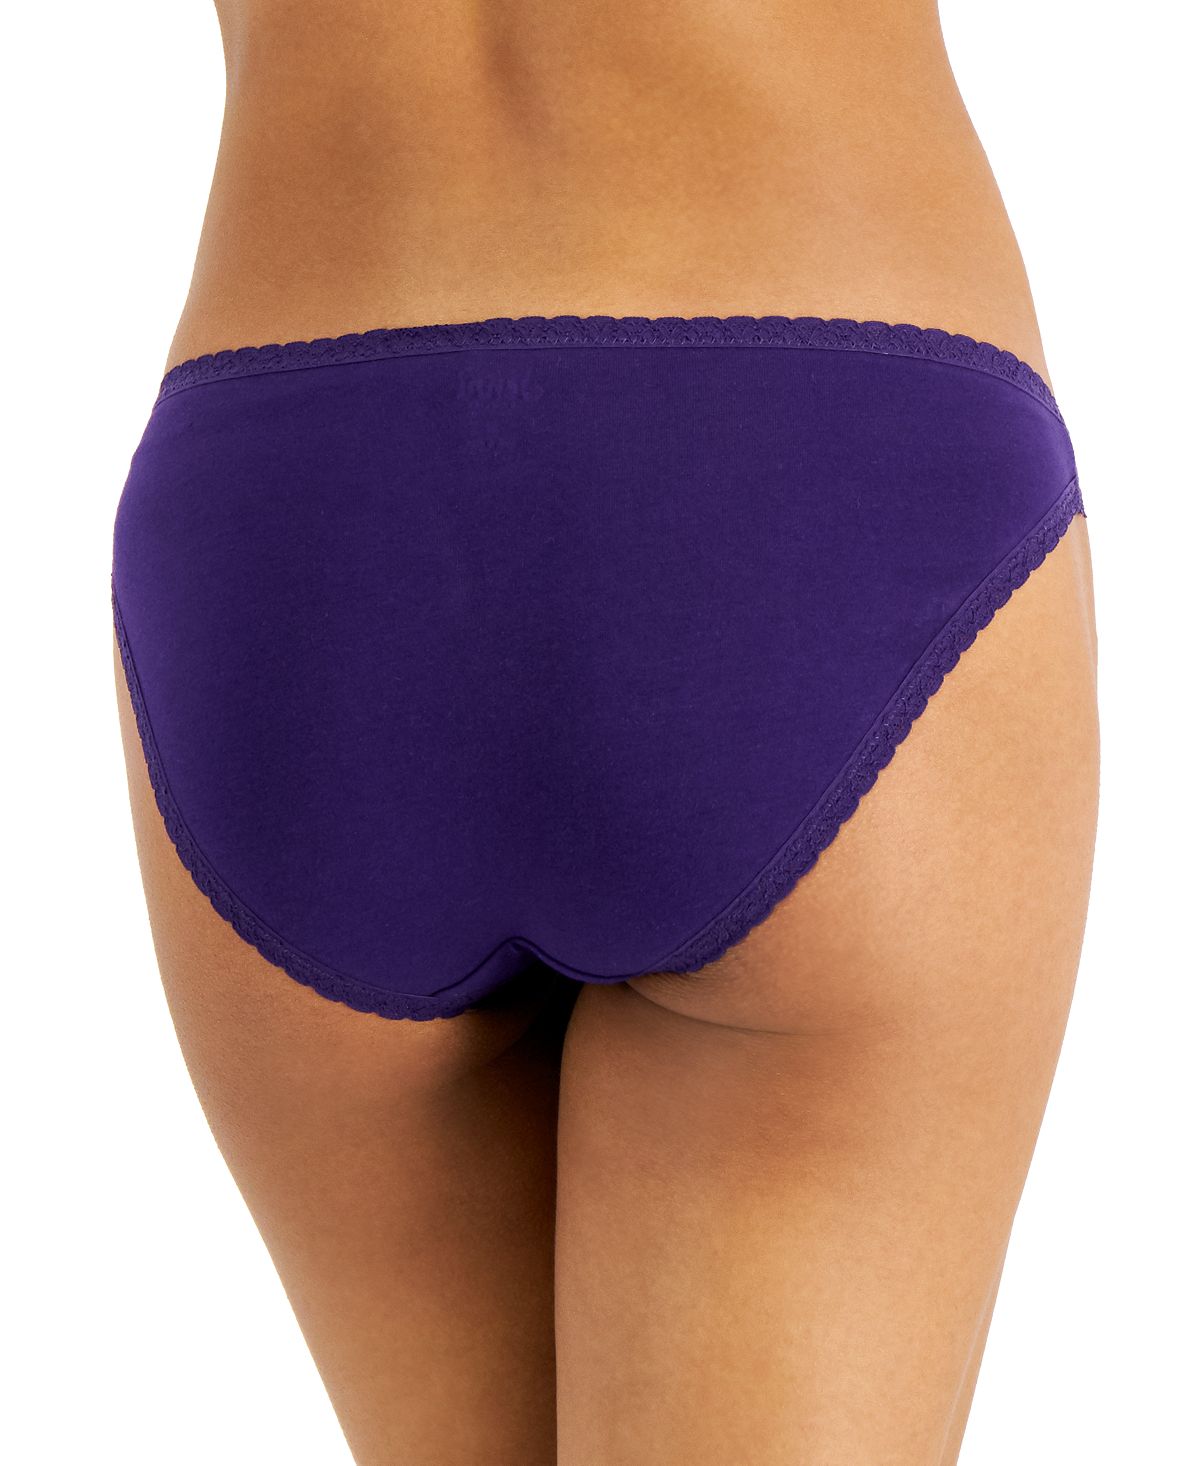 Jenni Women’s Lace Trim Bikini Underwear Purple